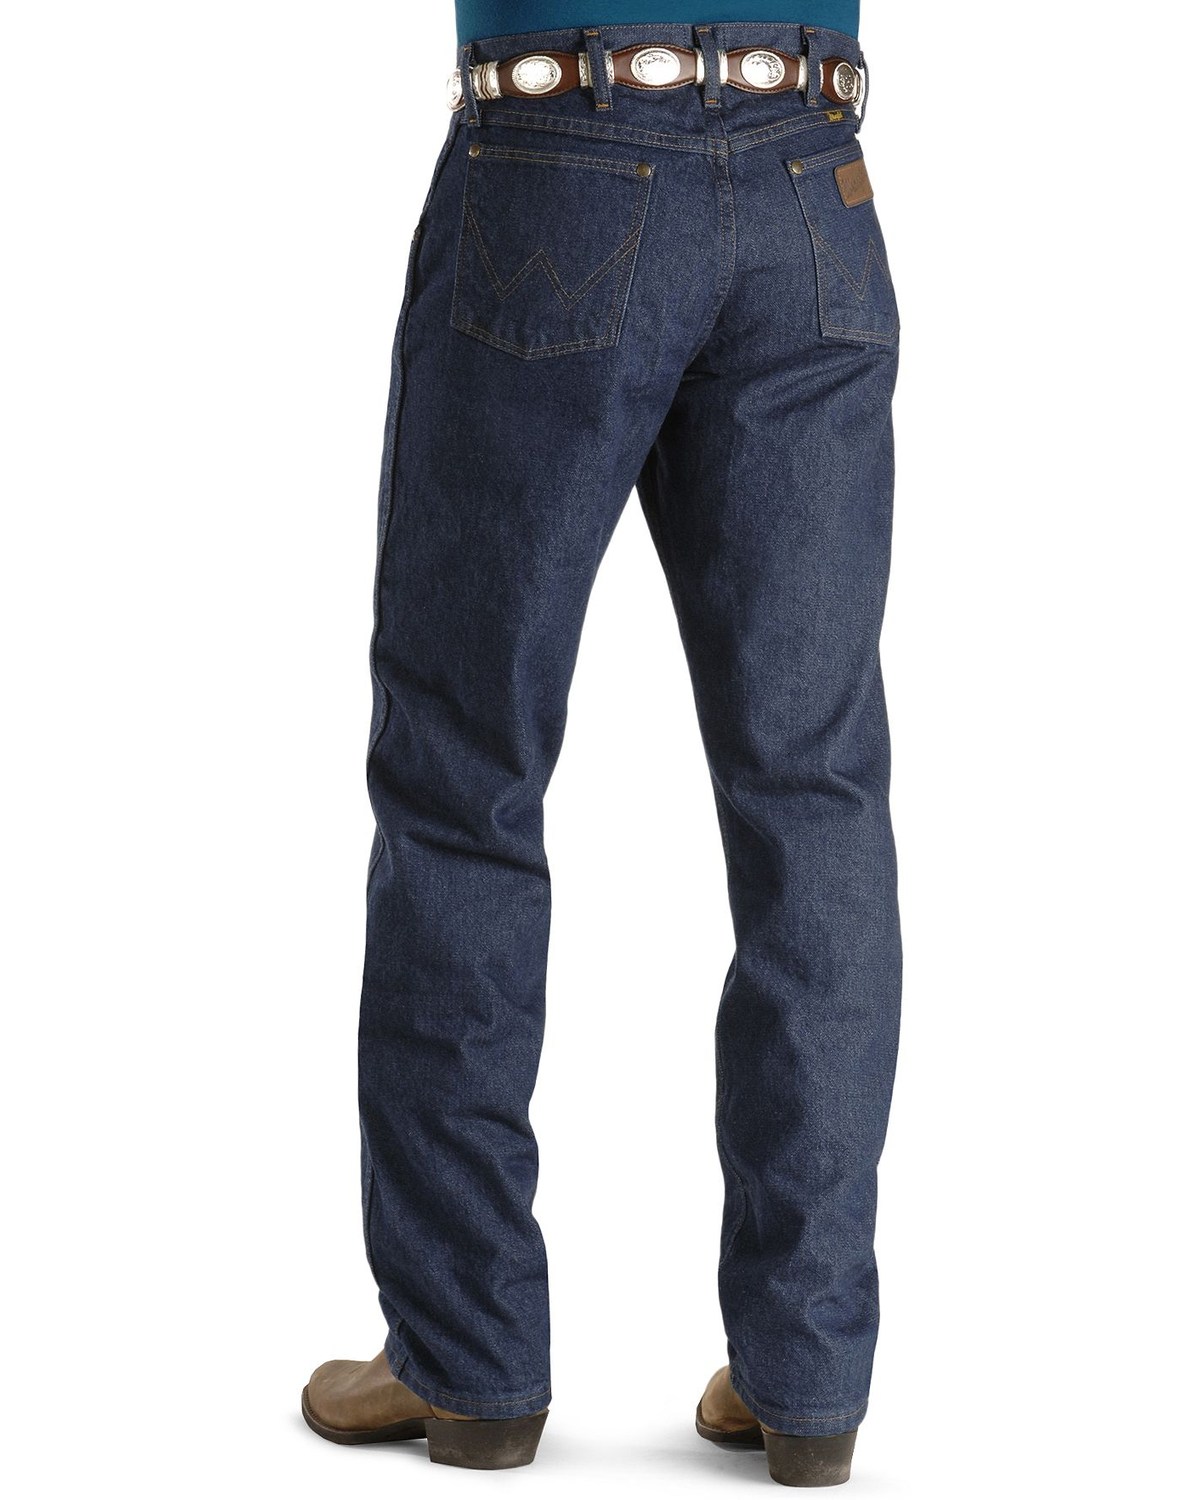 Wrangler Men's 47MWZ Original Fit Prewashed Jeans - 44" to 50" Waist